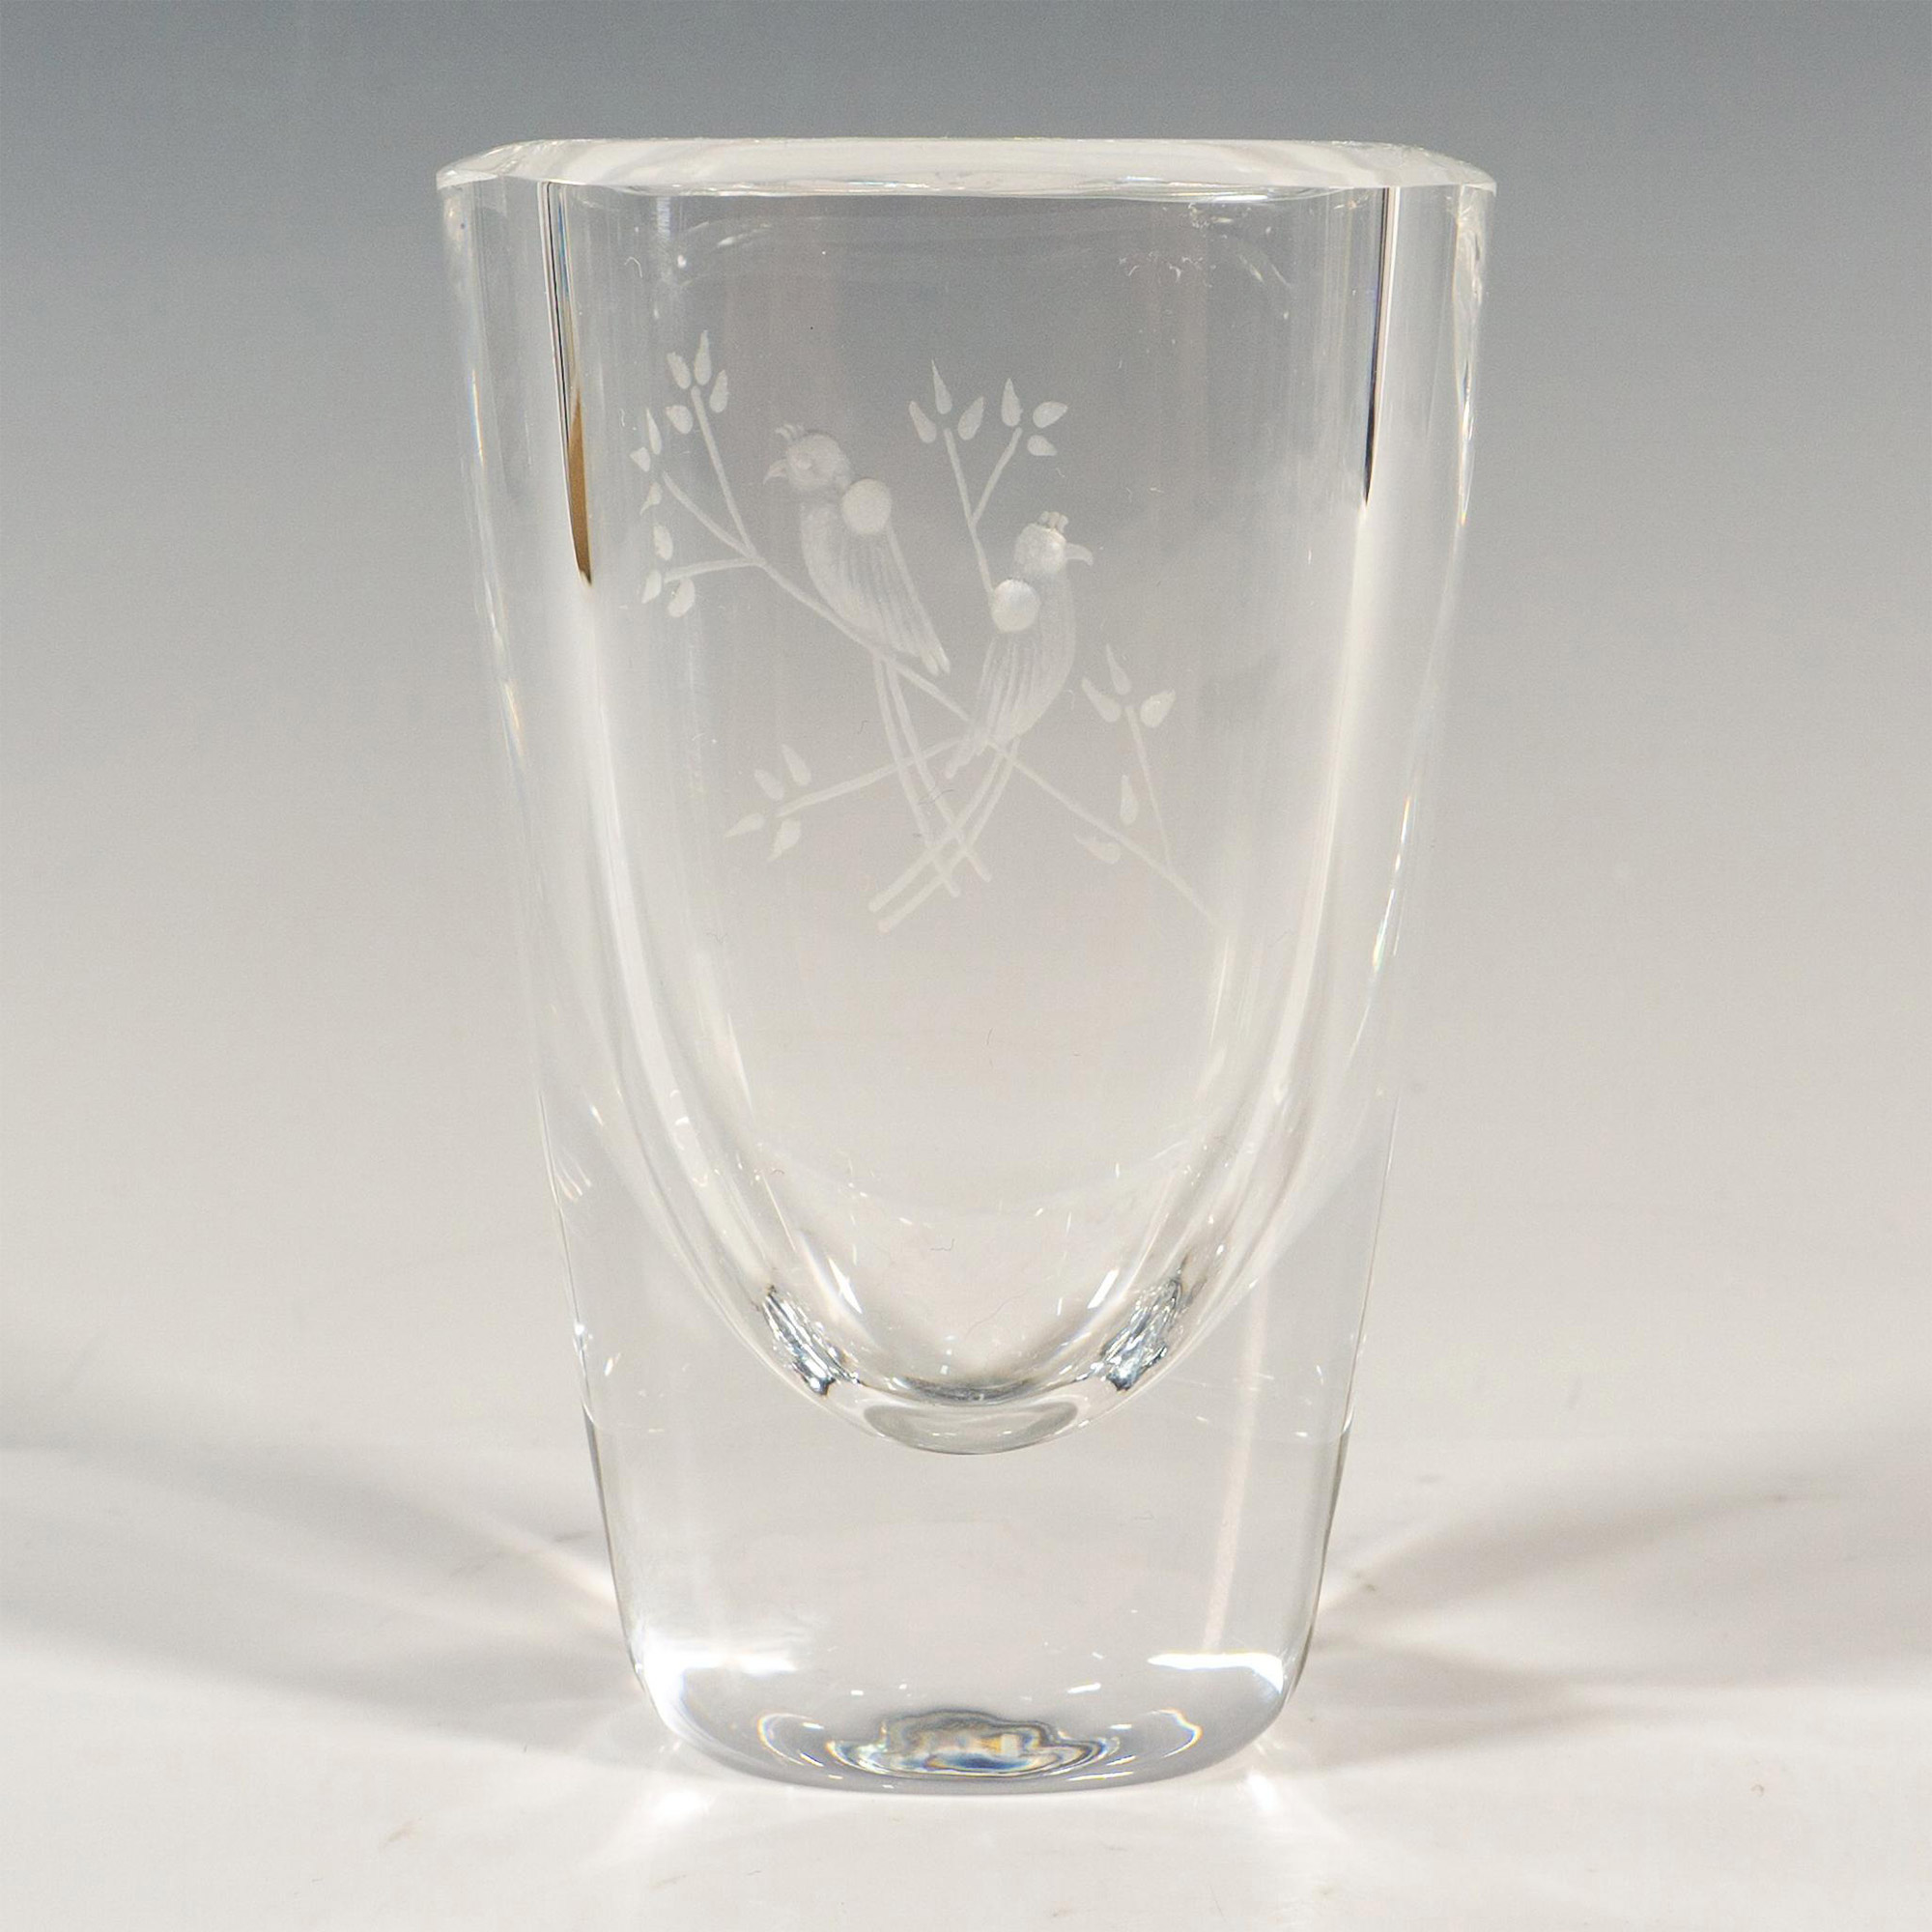 Orrefors Glass Etched Bird Vase - Image 2 of 3